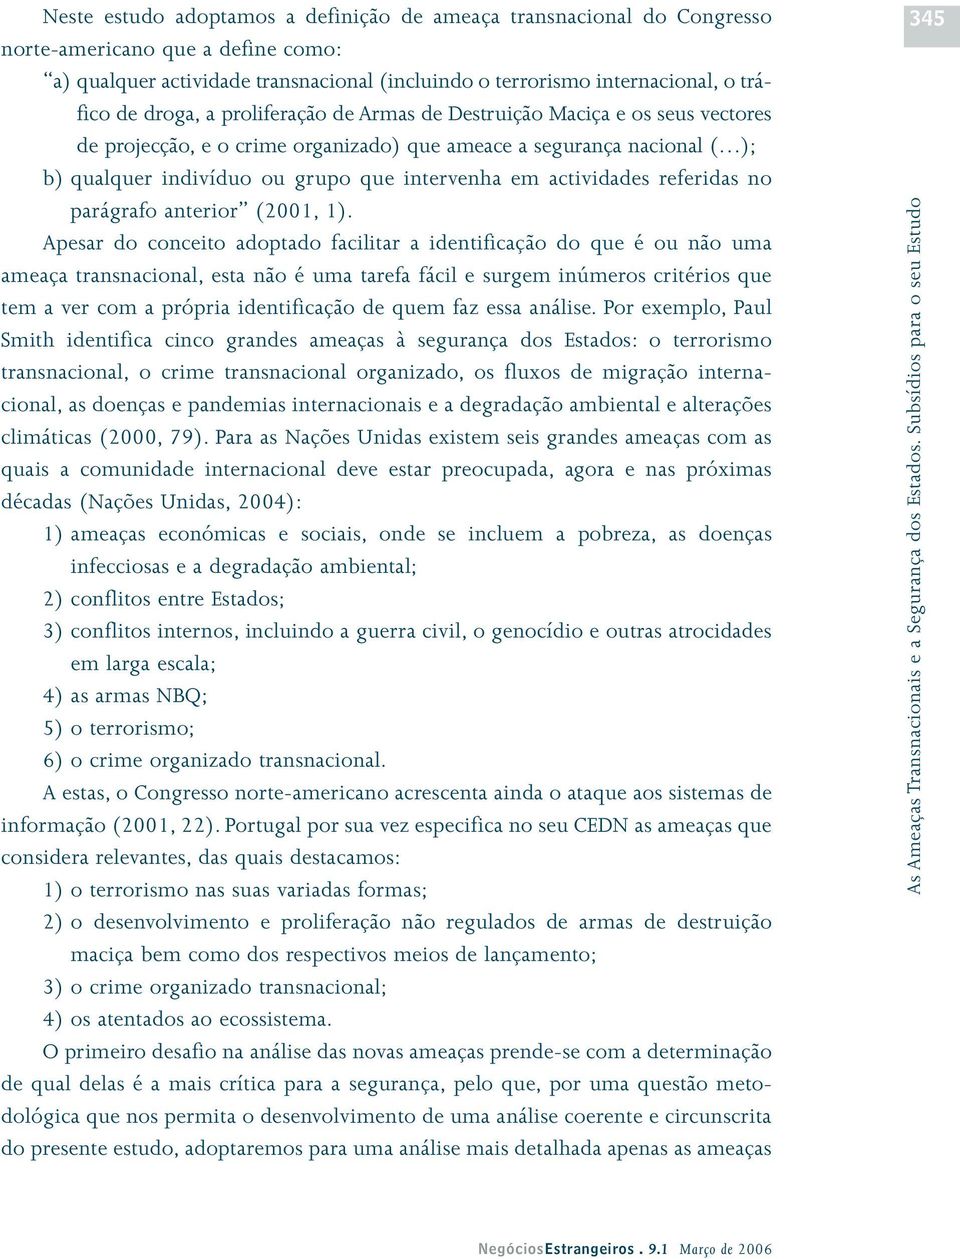 actividades referidas no parágrafo anterior (2001, 1).